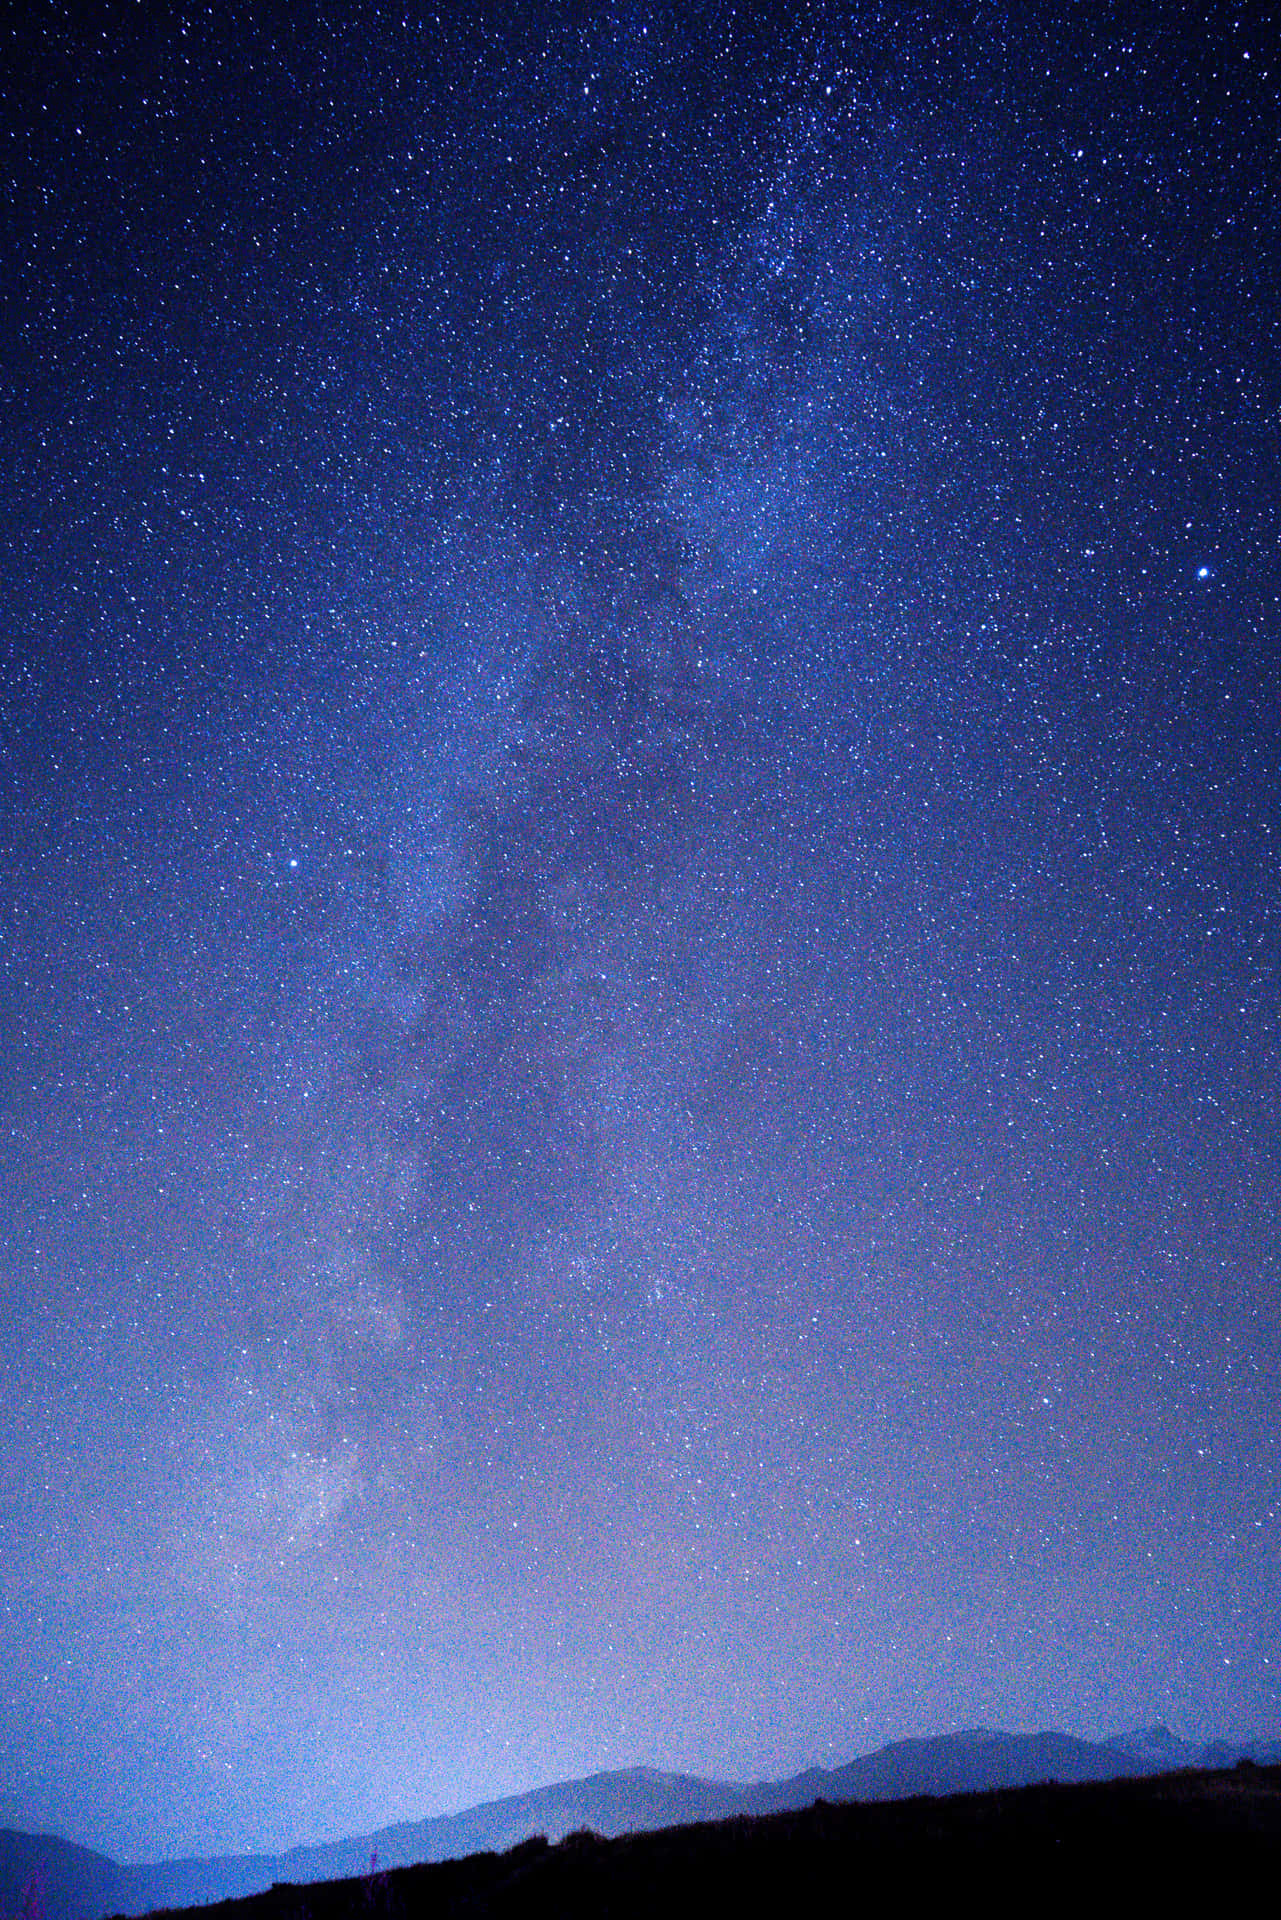 The Grandeur of a Starry Night Sky